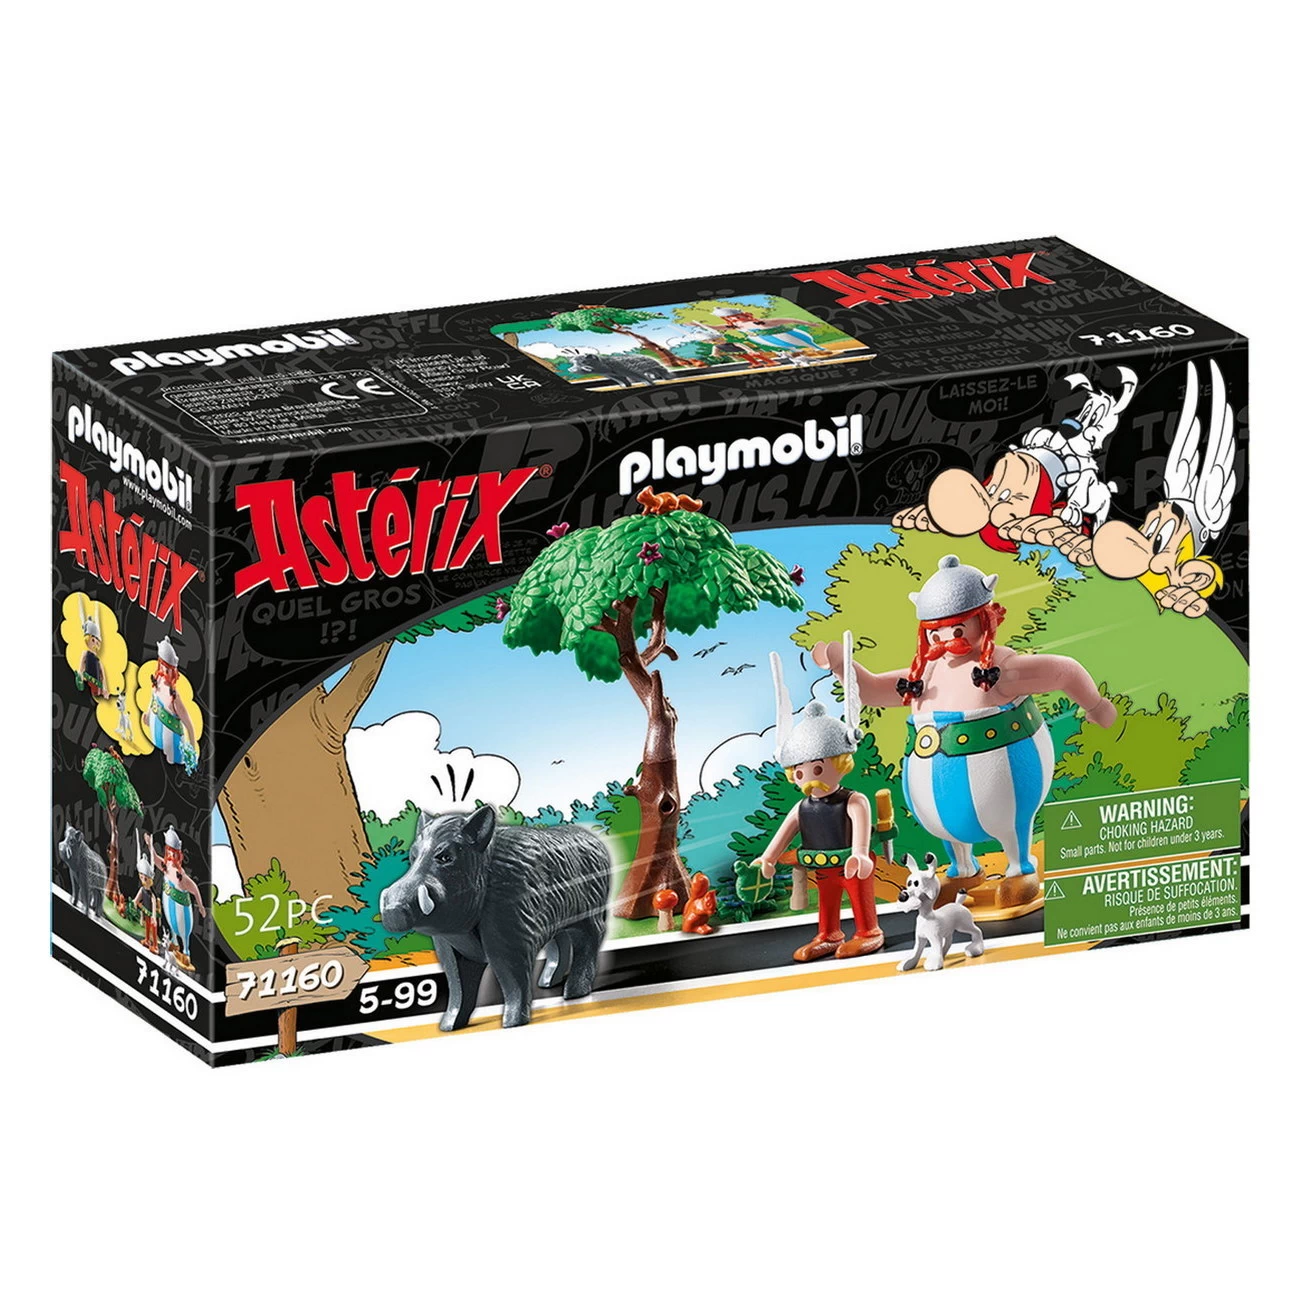 Playmobil 71160 - Asterix: Wildschweinjagd